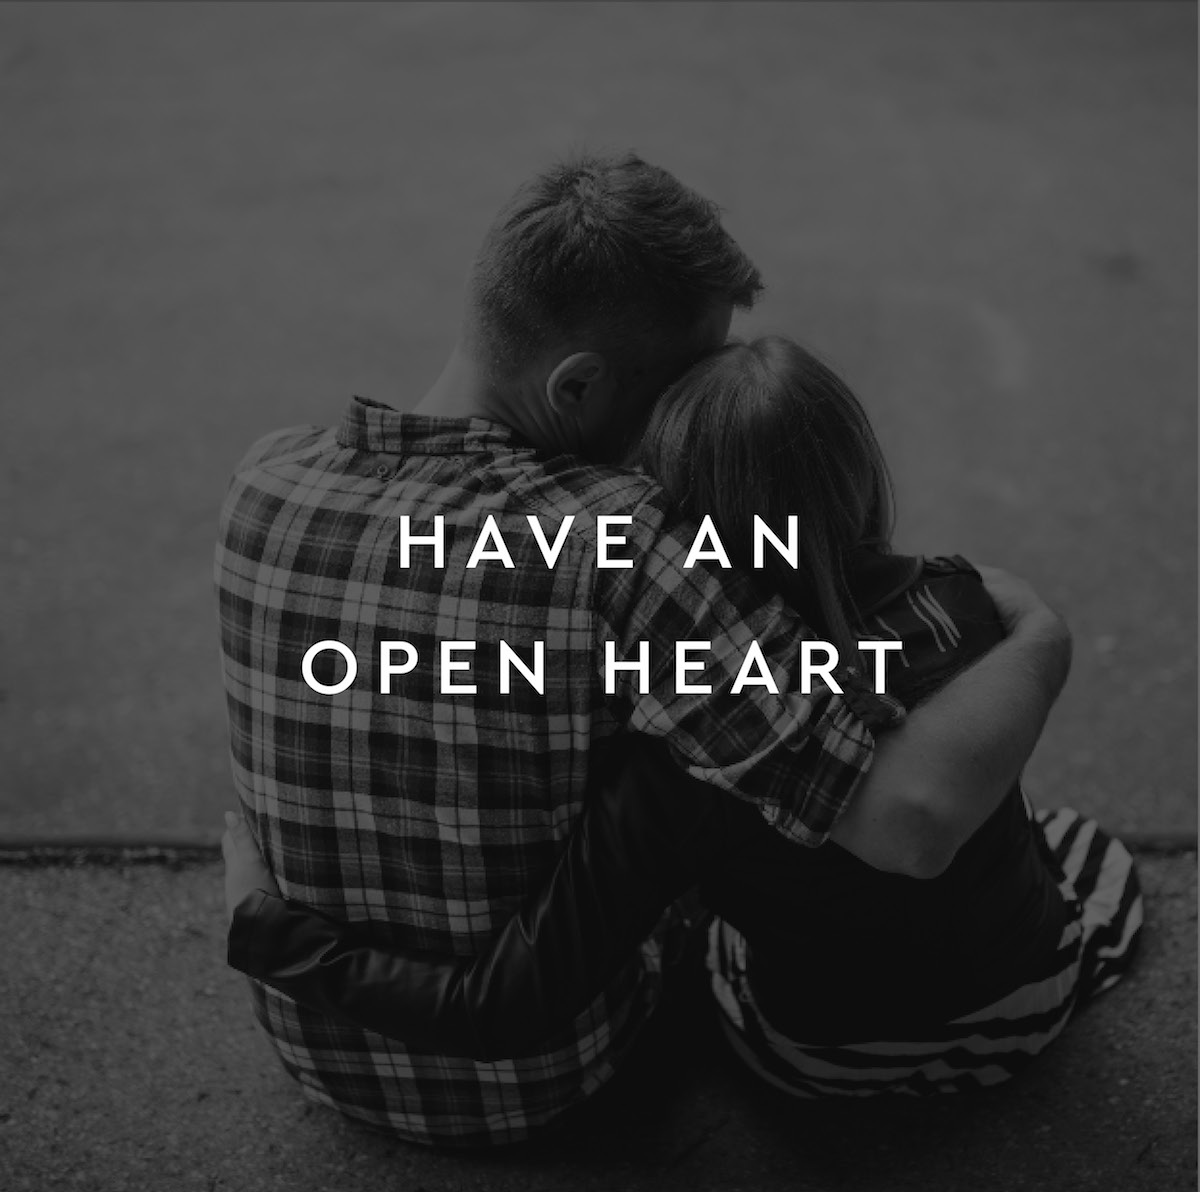 Have an open heart